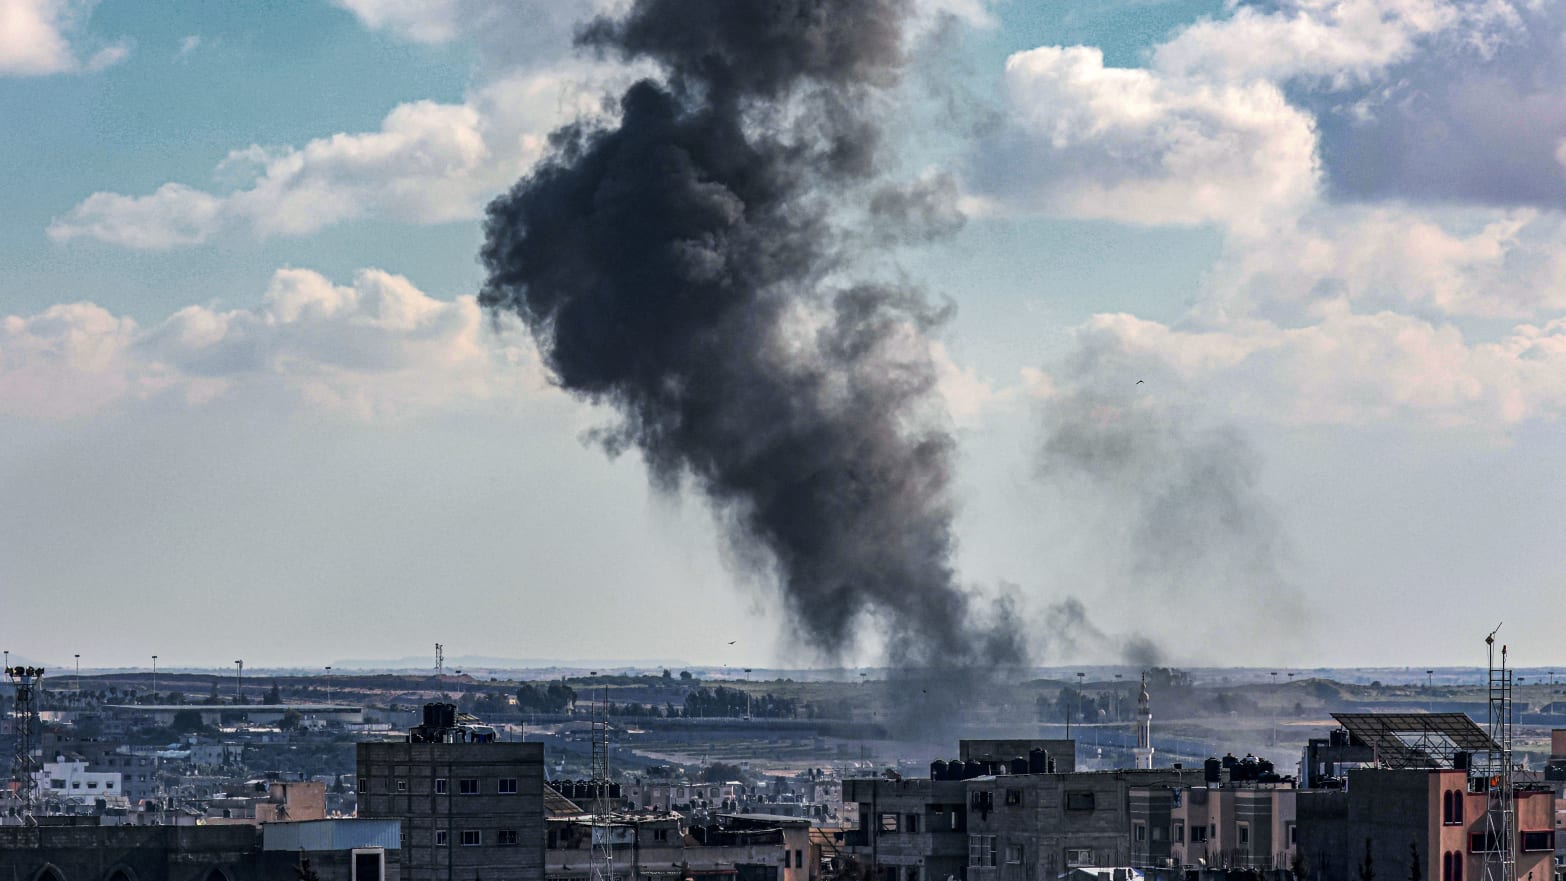 Israel bombs Rafah following Biden’s warning regarding arms transfers 
Image Source: The Daily Beast